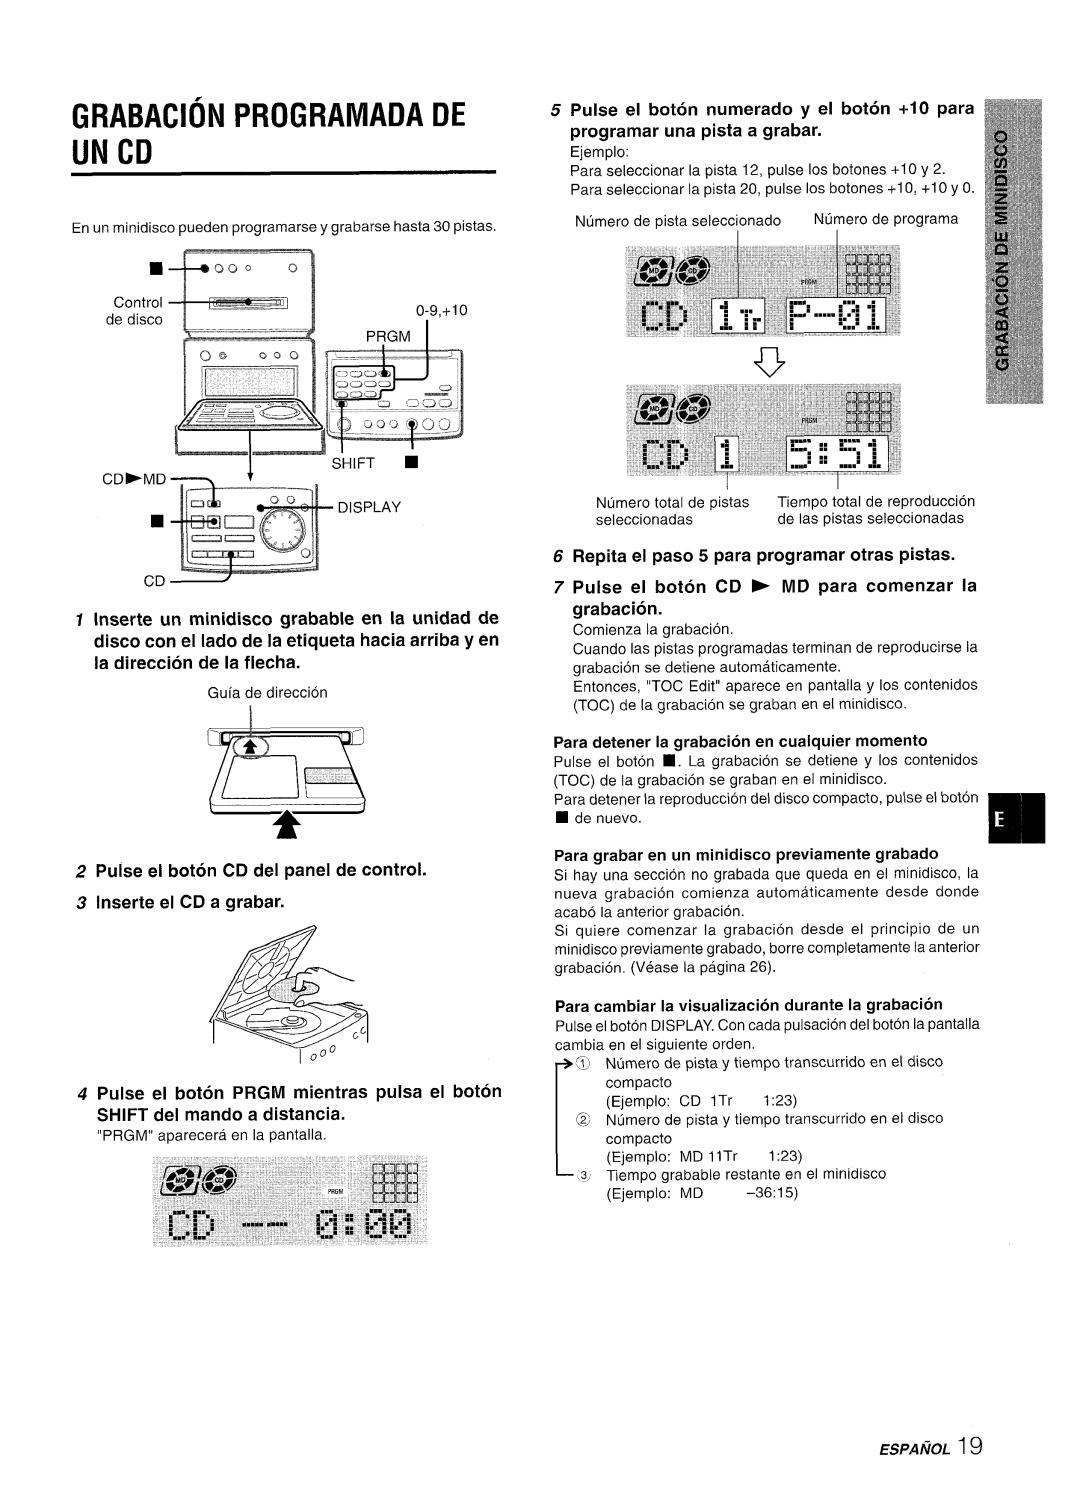 Aiwa XR-MD95 manual GRABAC16N PROGRAMADA DE UN CD, Repita el paso 5 para programar otras pistas, Espanol 